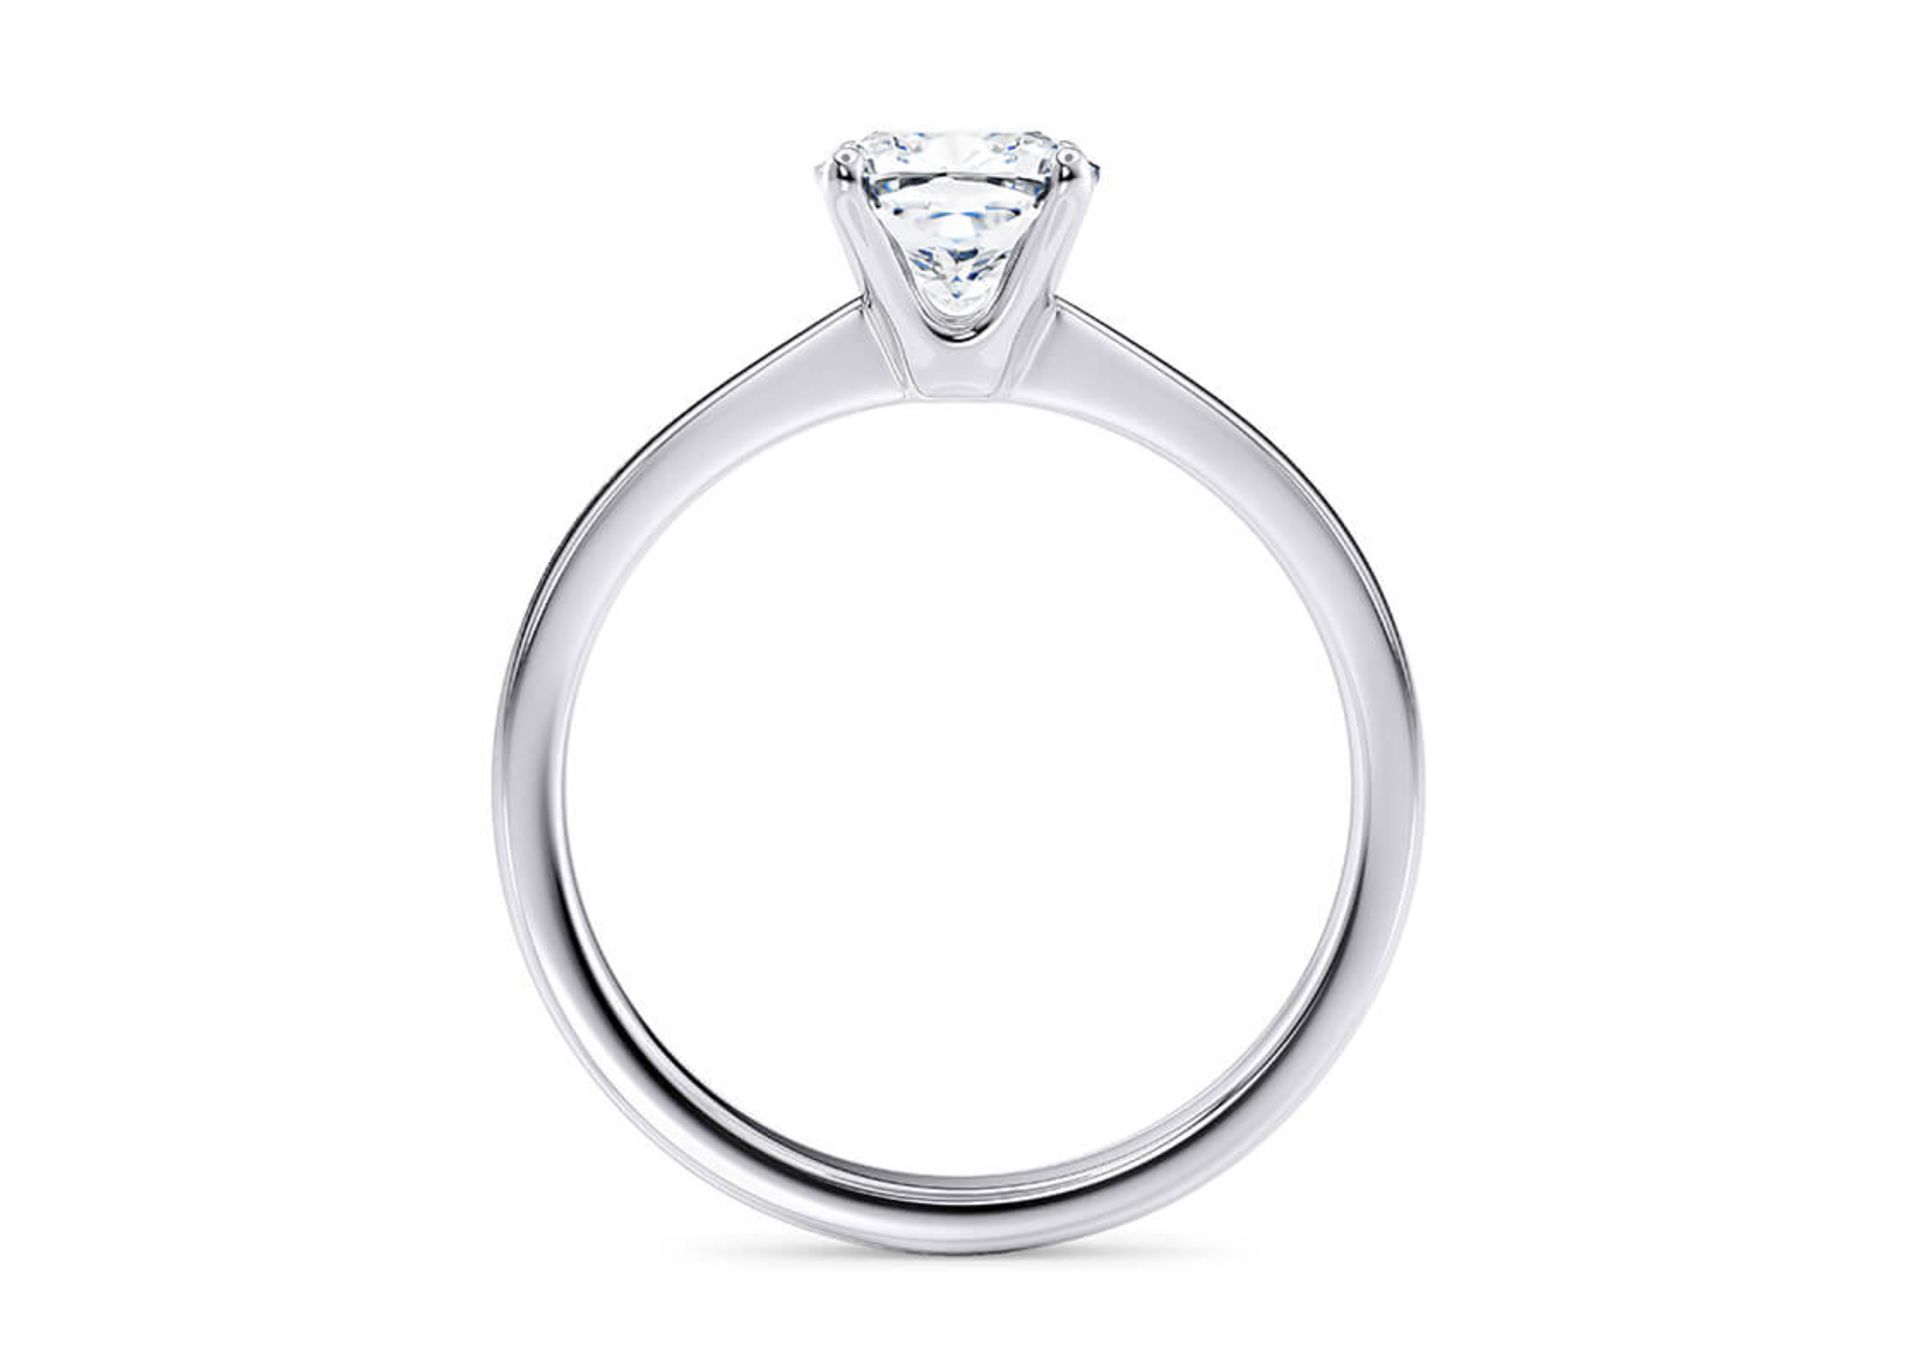 ** ON SALE ** Cushion Cut Diamond 18kt White Gold Ring 2.00 Carat F Colour VS1 Clarity EX EX - IGI - Image 2 of 4